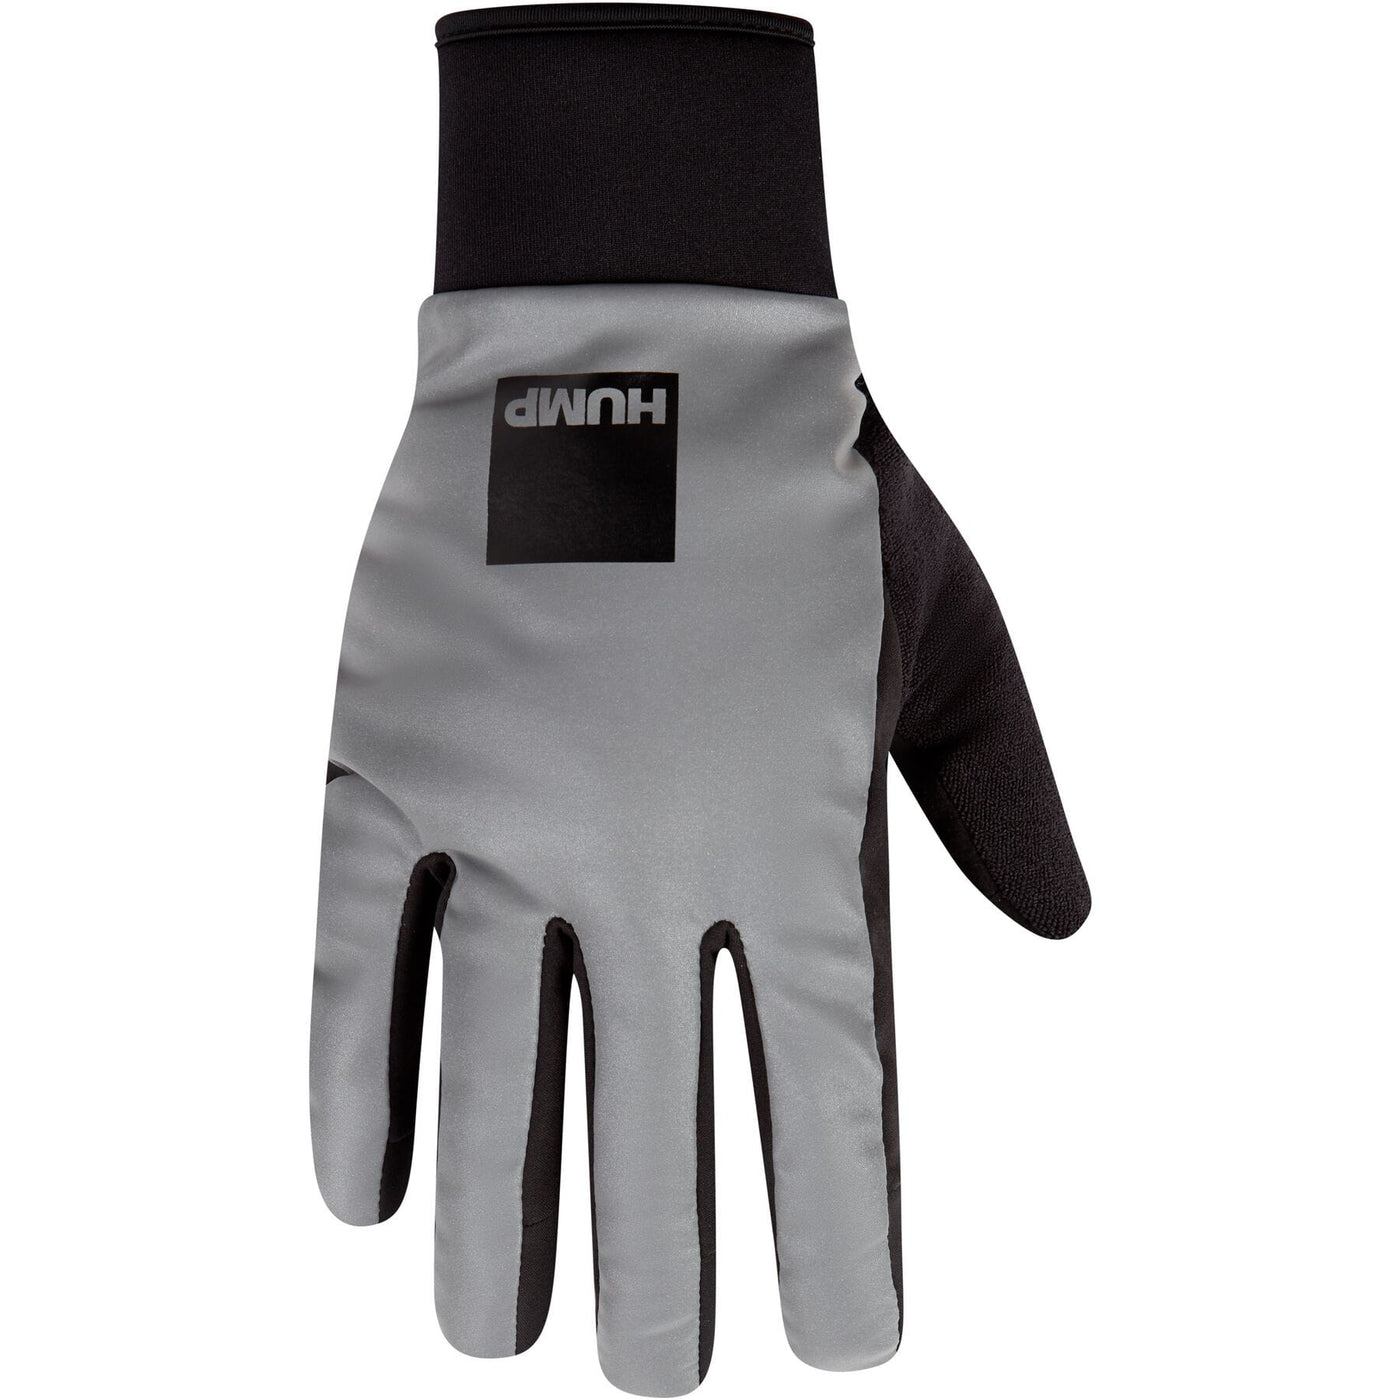 HUMP Ultra Reflective Waterproof Glove